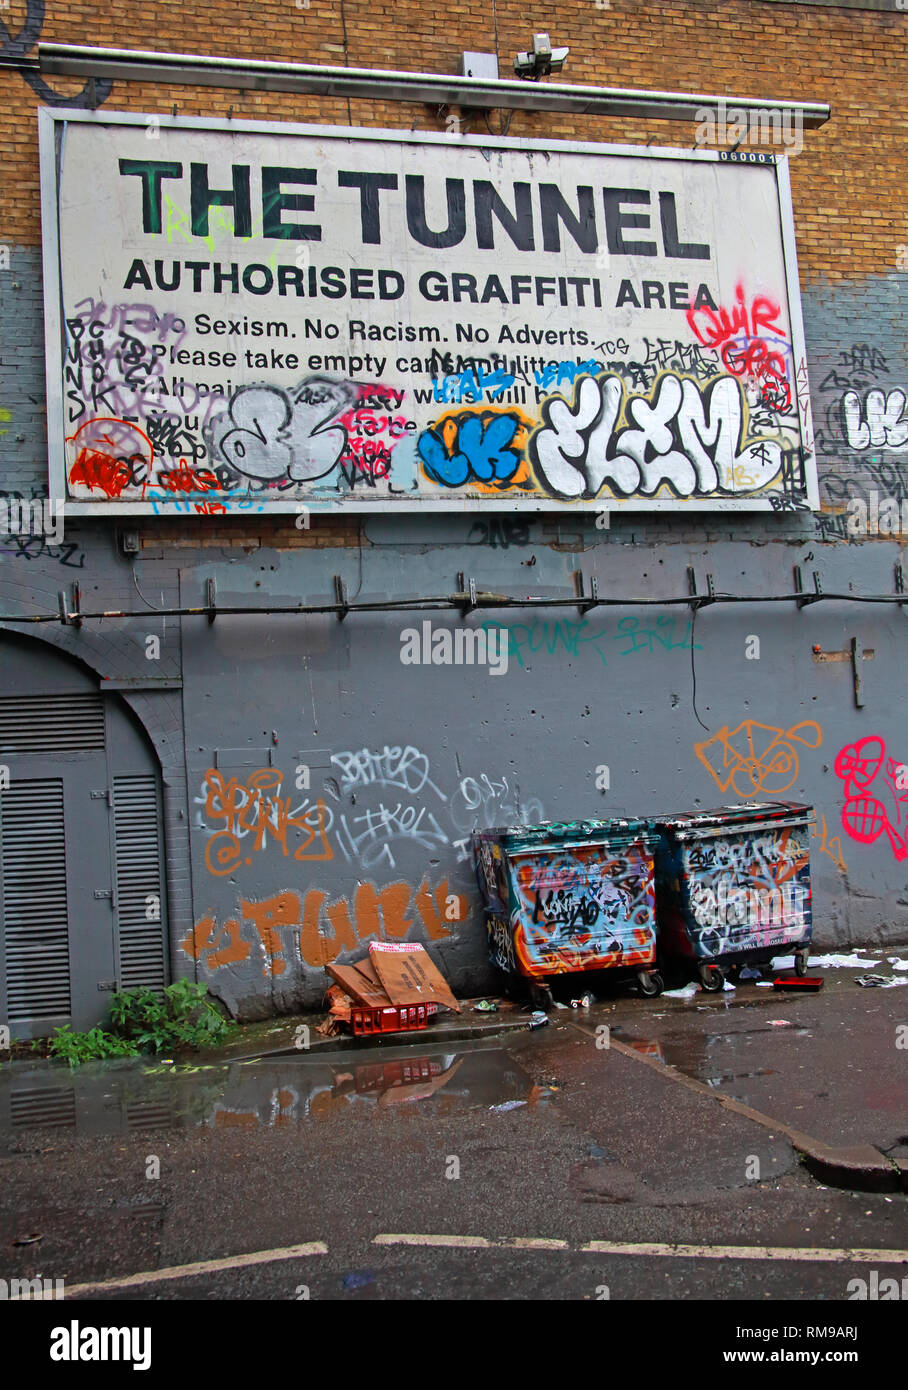 Der Tunnel, der befugt ist, Graffiti, Leake Straße, Waterloo, Lambeth, London, England, UK, SE1 7NN Stockfoto